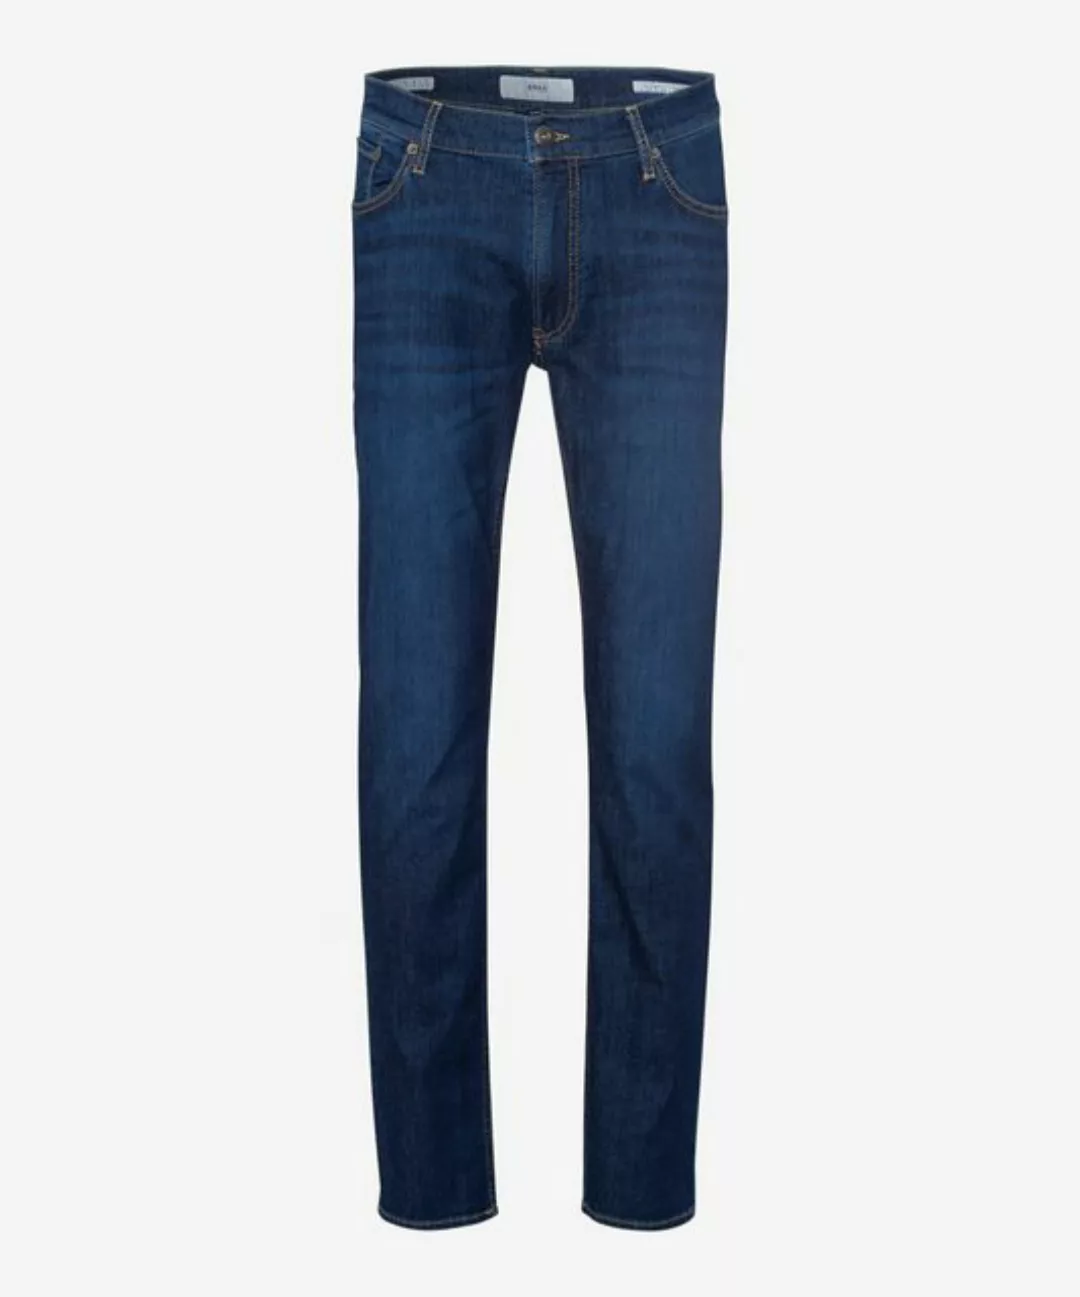 Brax 5-Pocket-Jeans BRAX CHUCK cryptic blue used 7953020 84-6254-25 - HI-FL günstig online kaufen